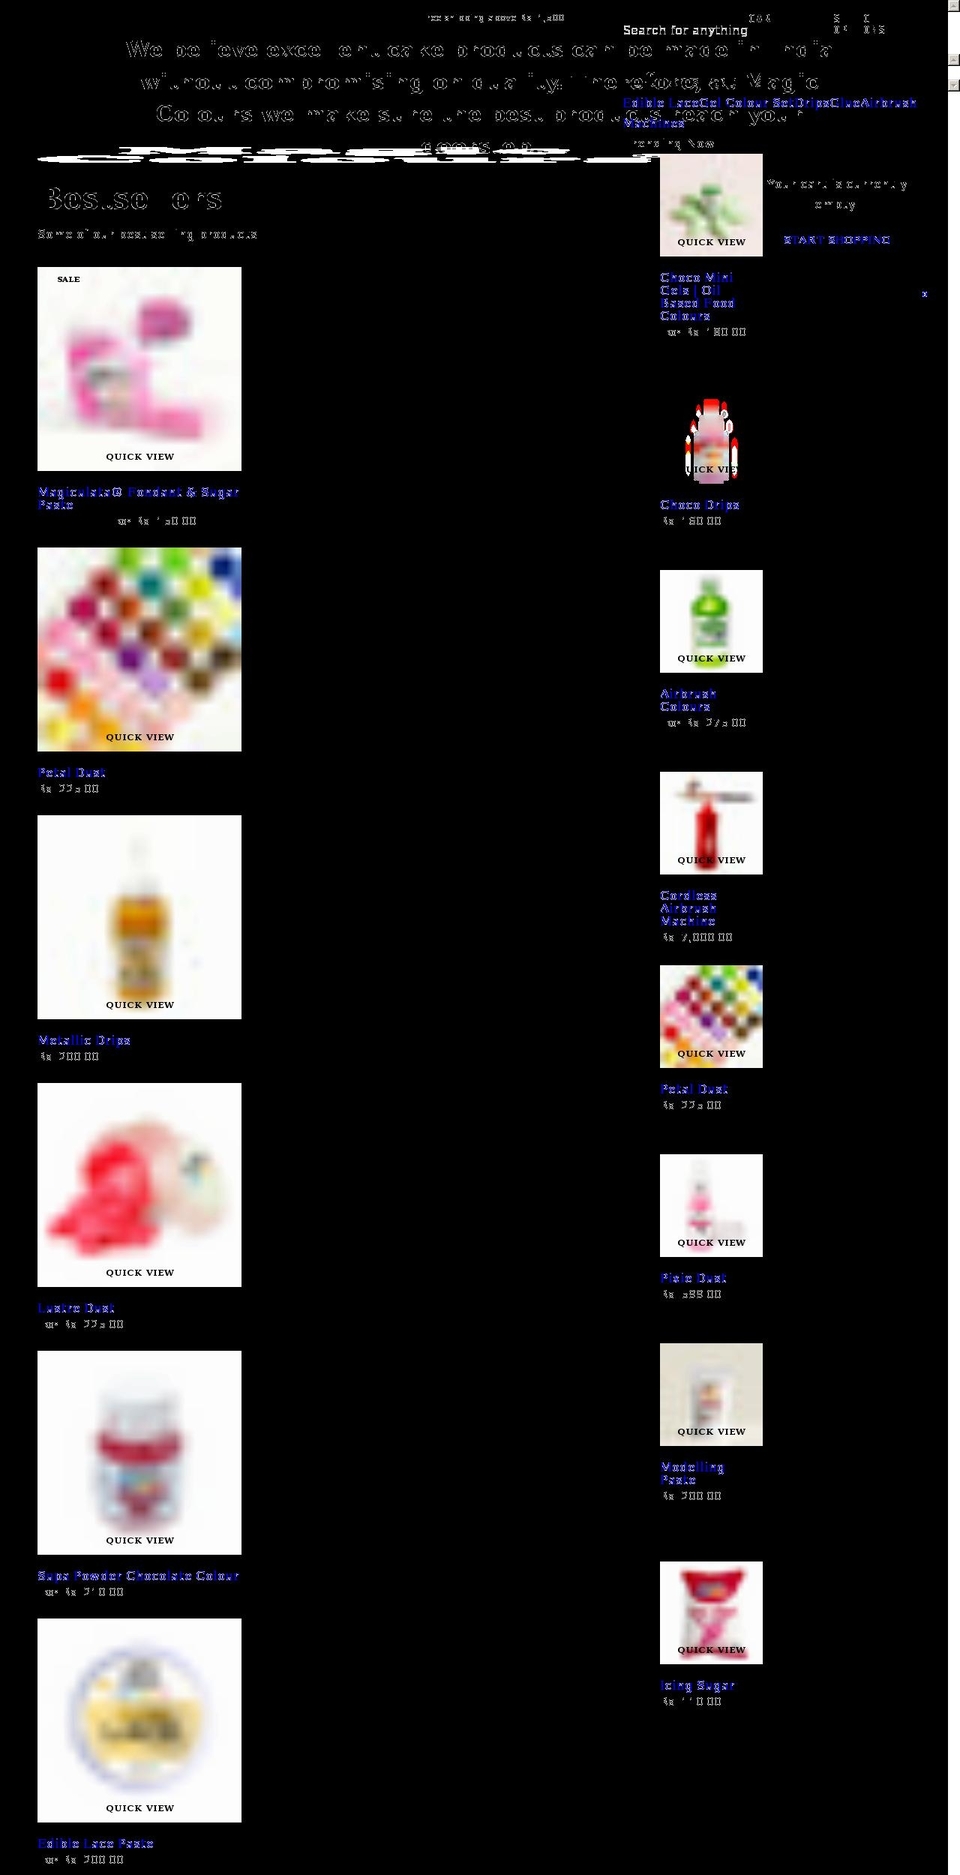 magiccolours.co.in shopify website screenshot